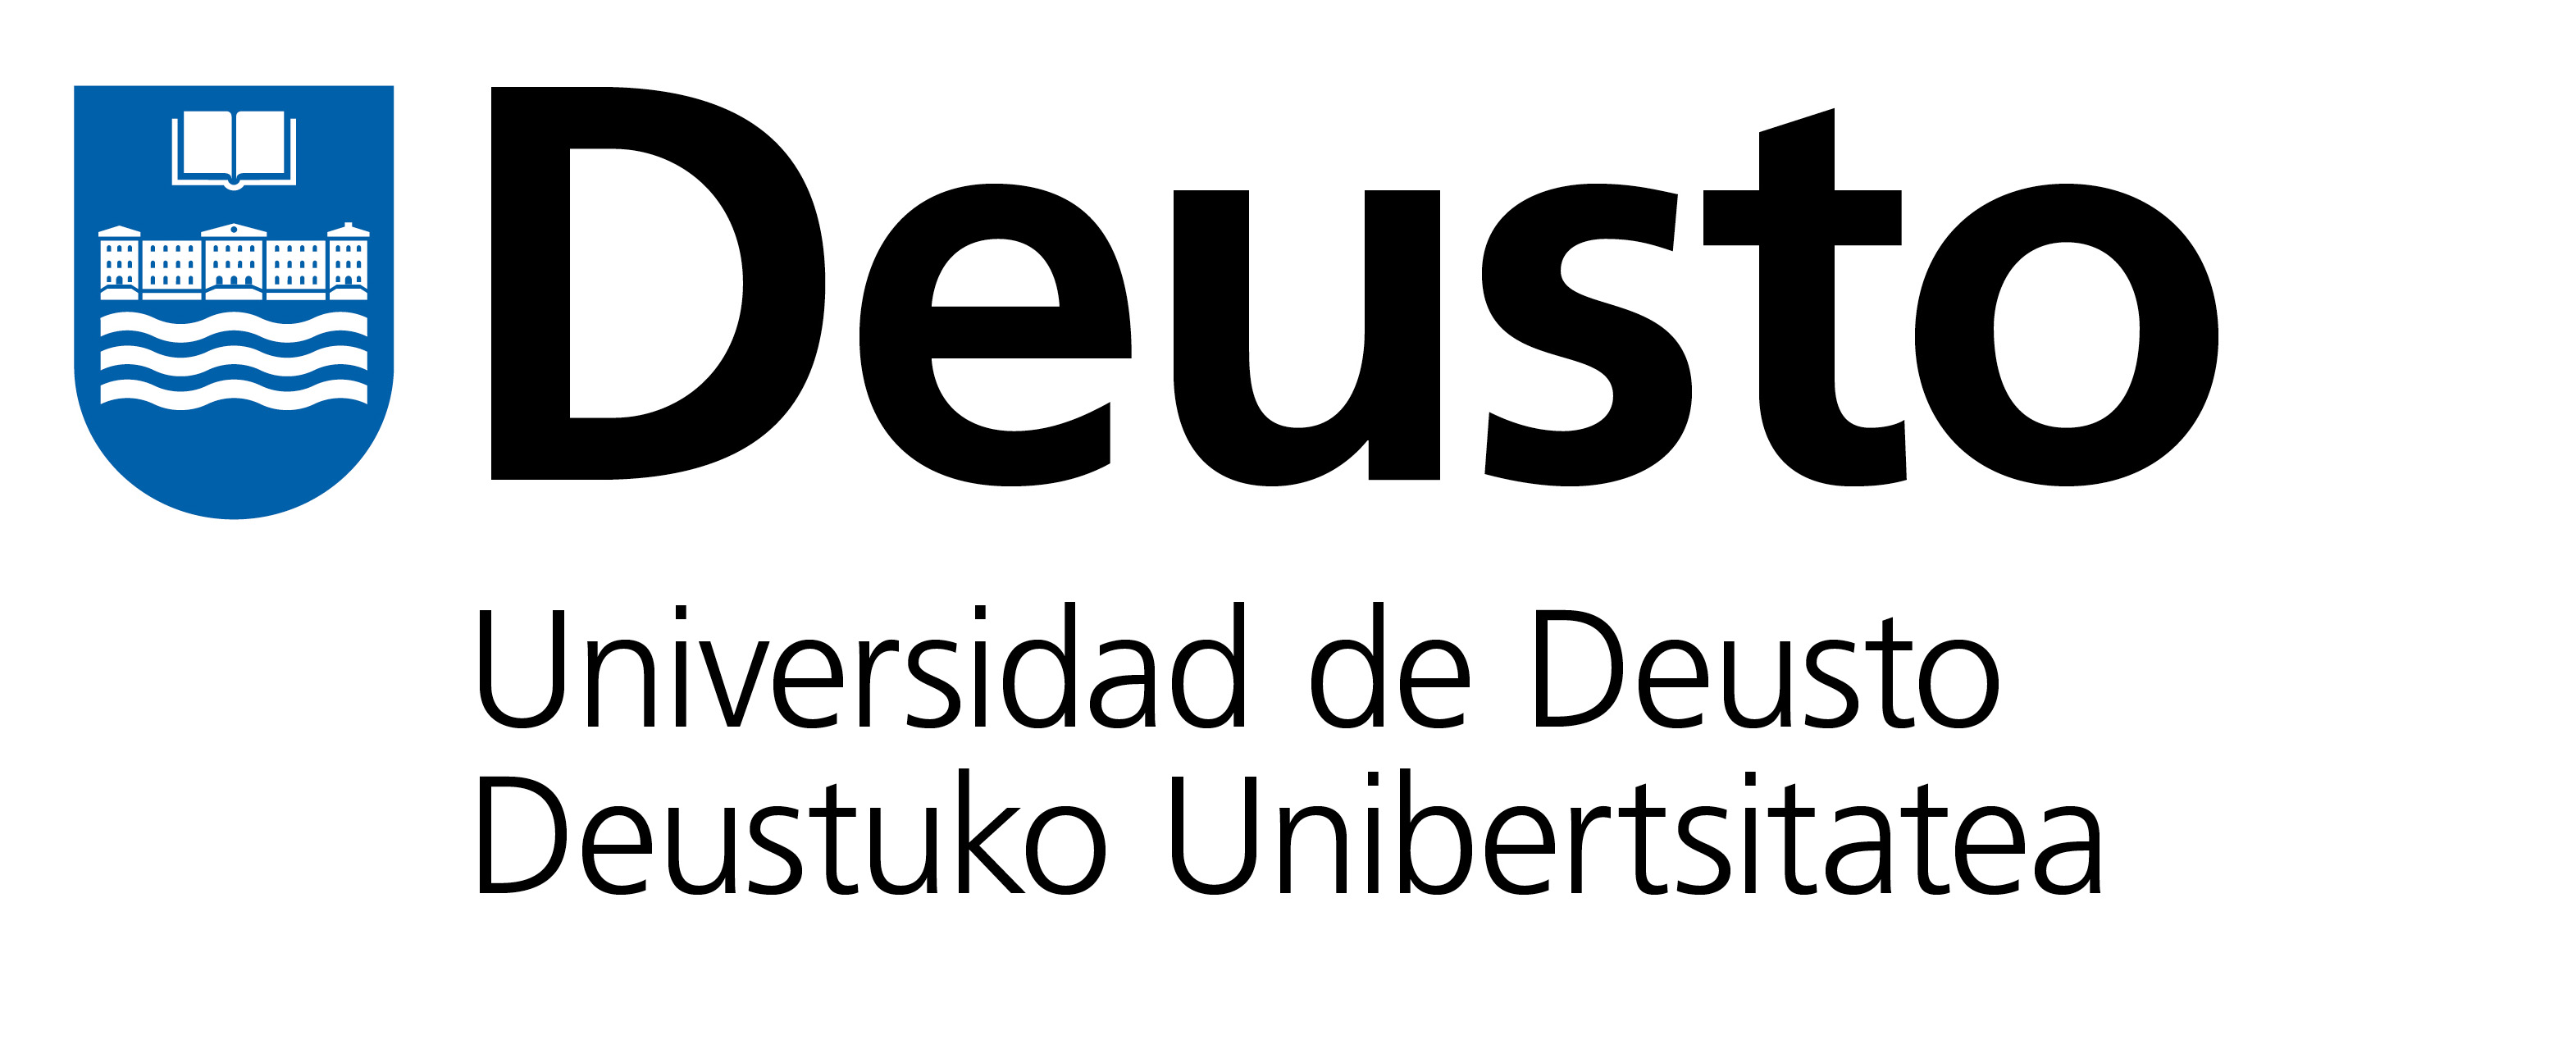 Logotipo-UDeusto